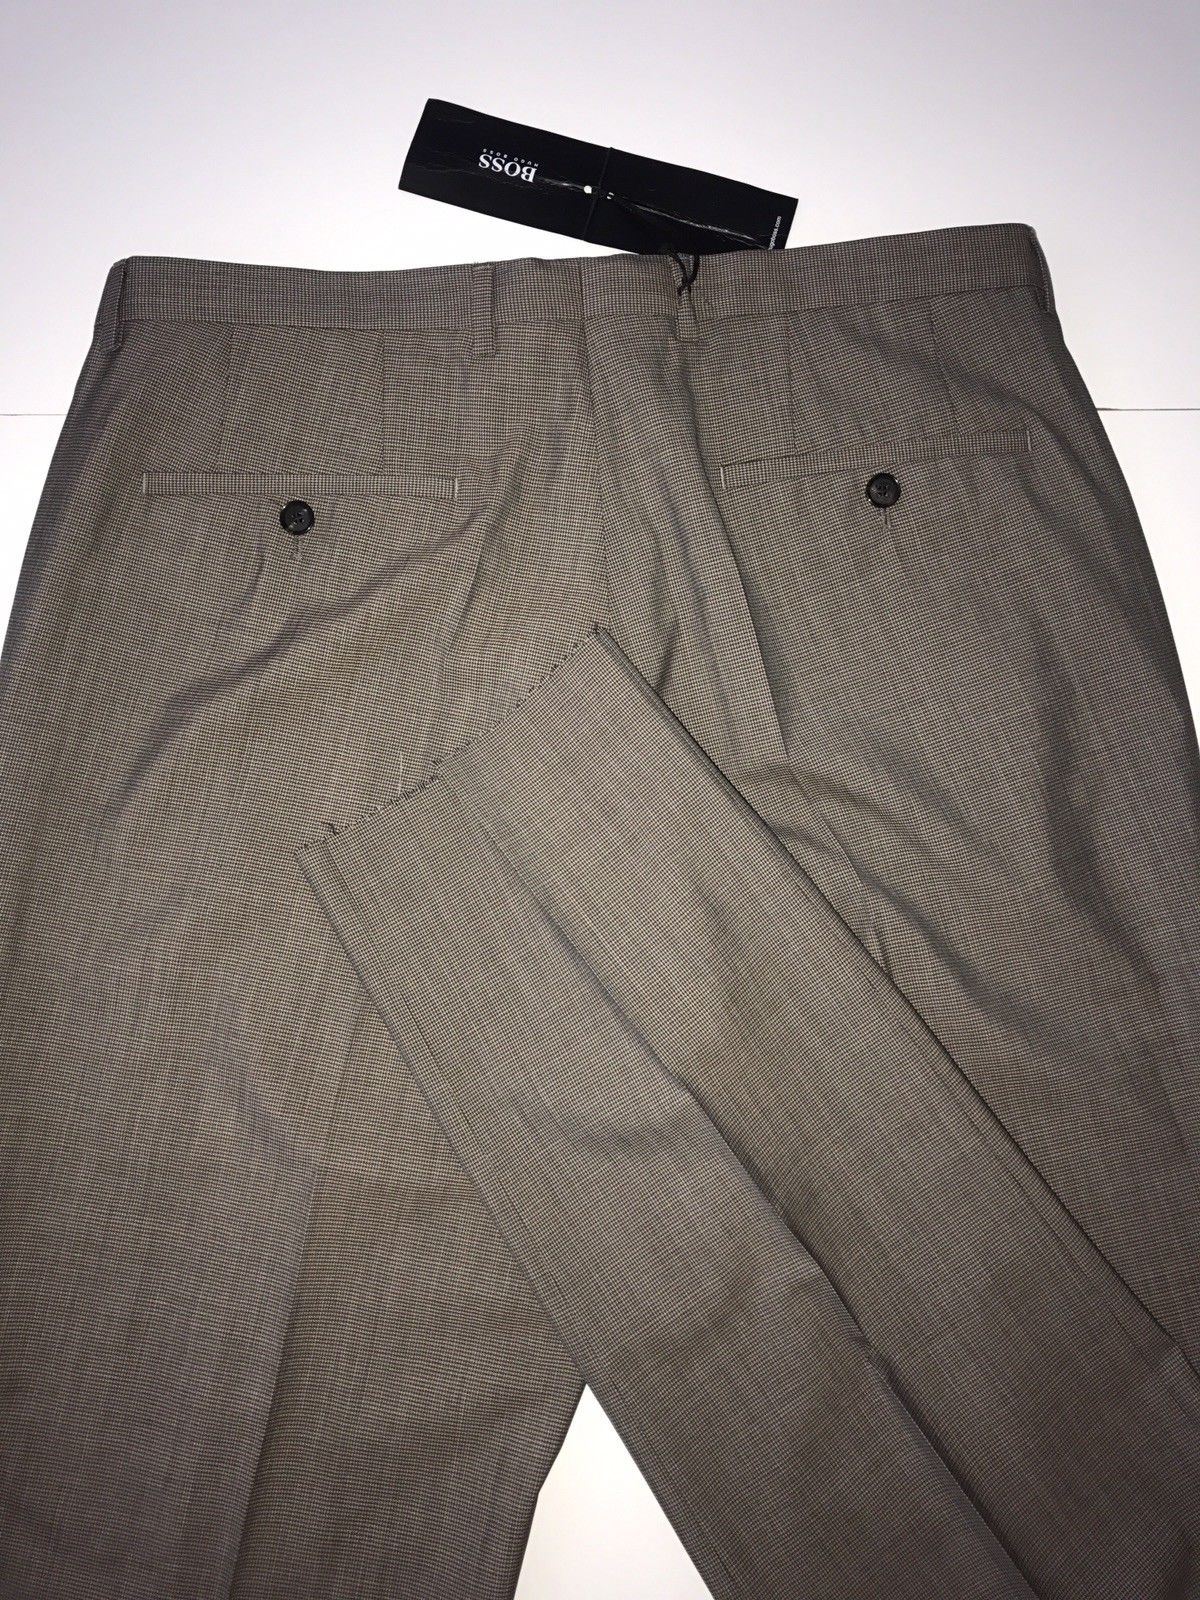 NWT $255 Boss Hugo Boss Central Mens Medium Brown  Dress Pants Size 35R  US